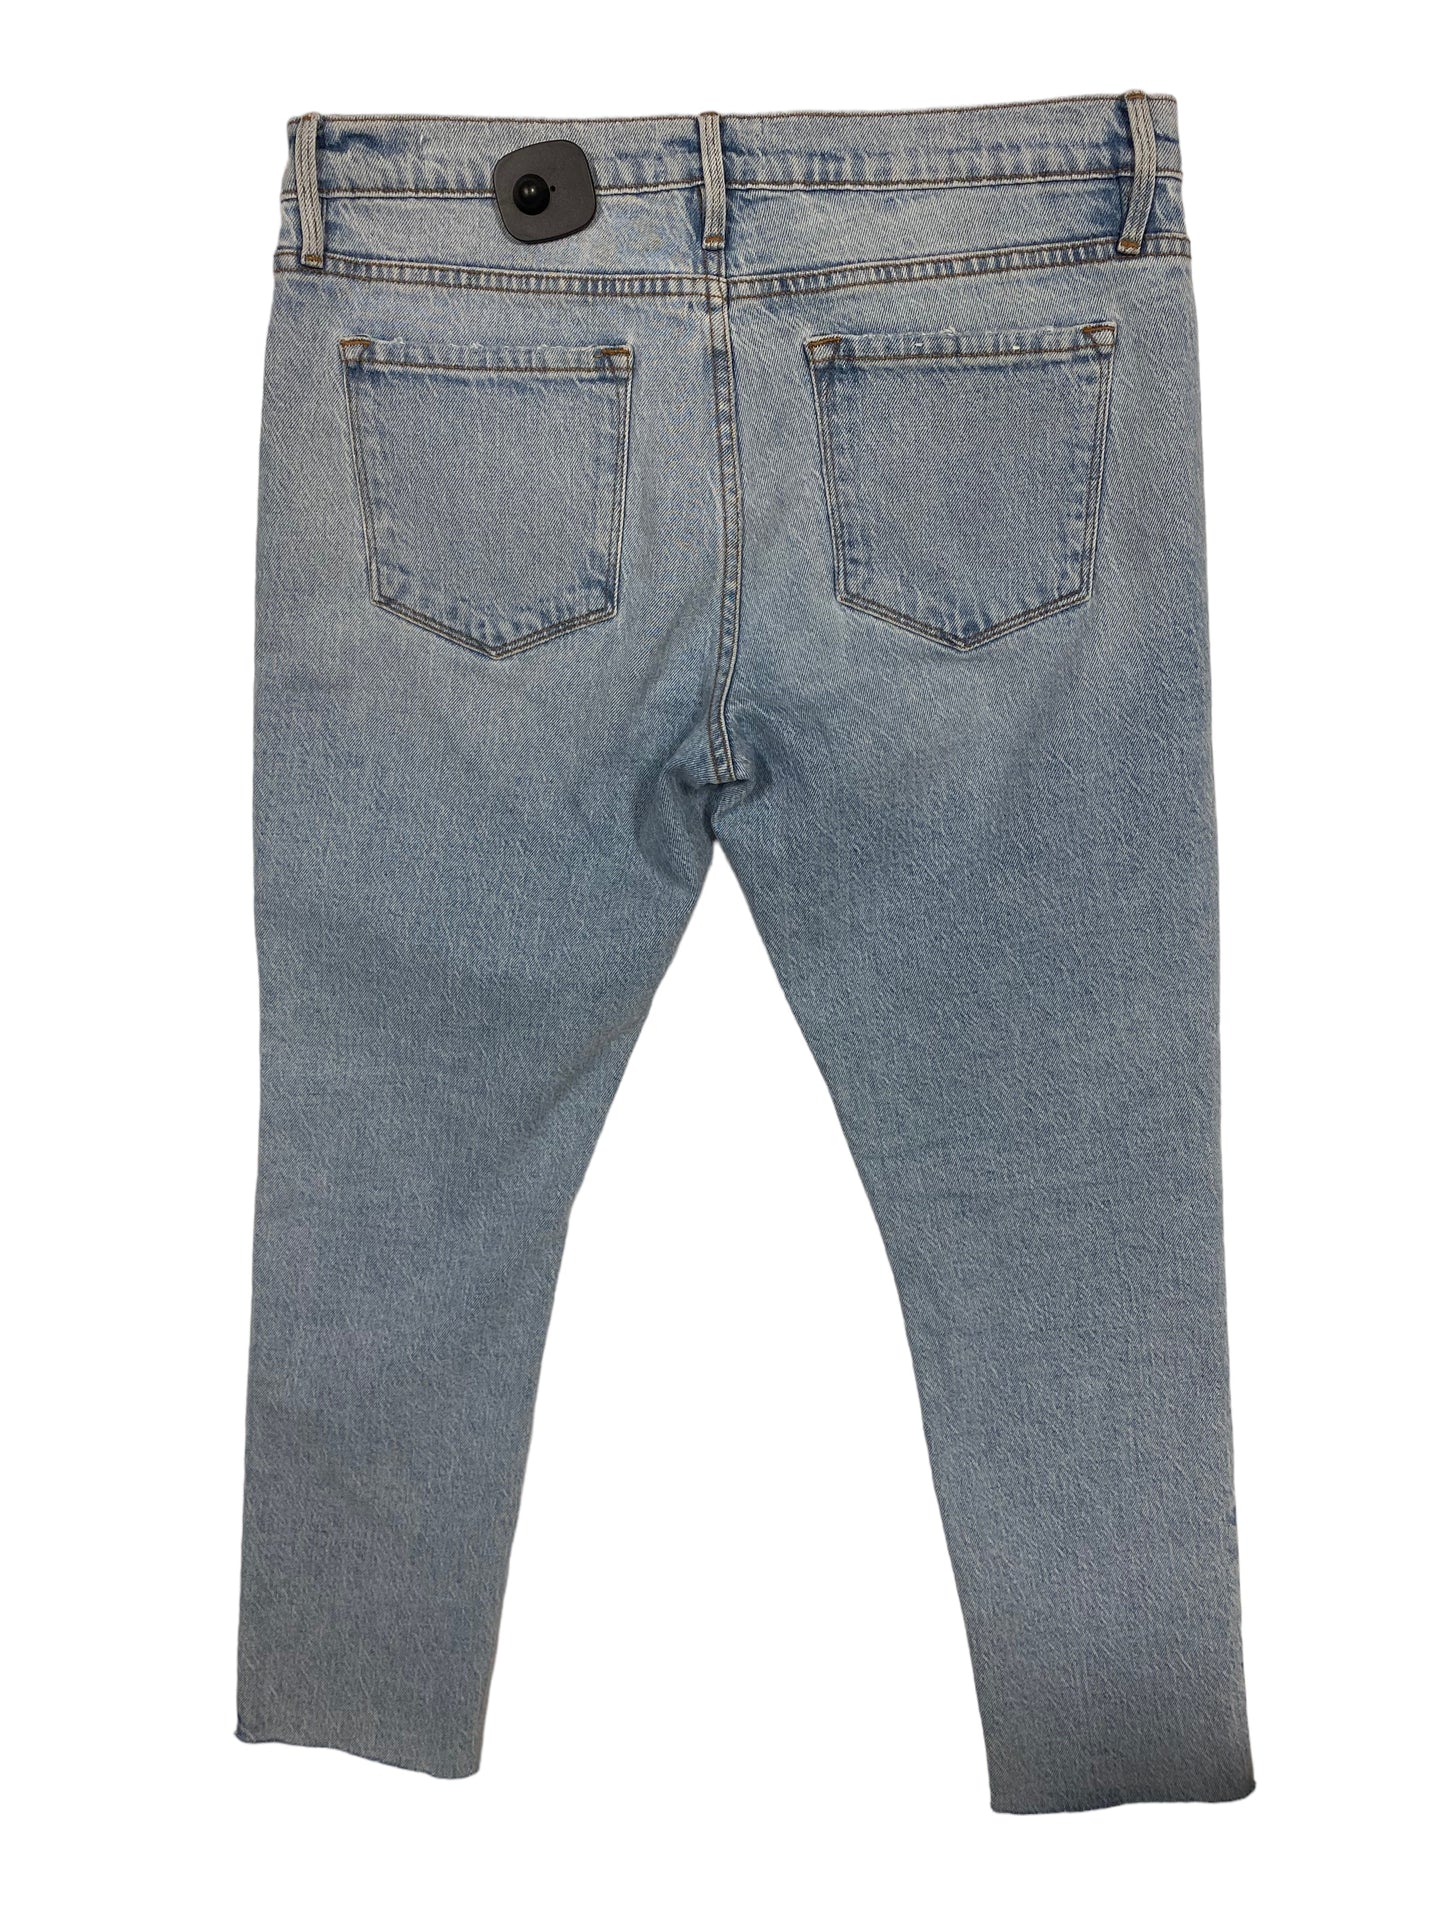 Blue Denim Jeans Skinny Frame, Size 8